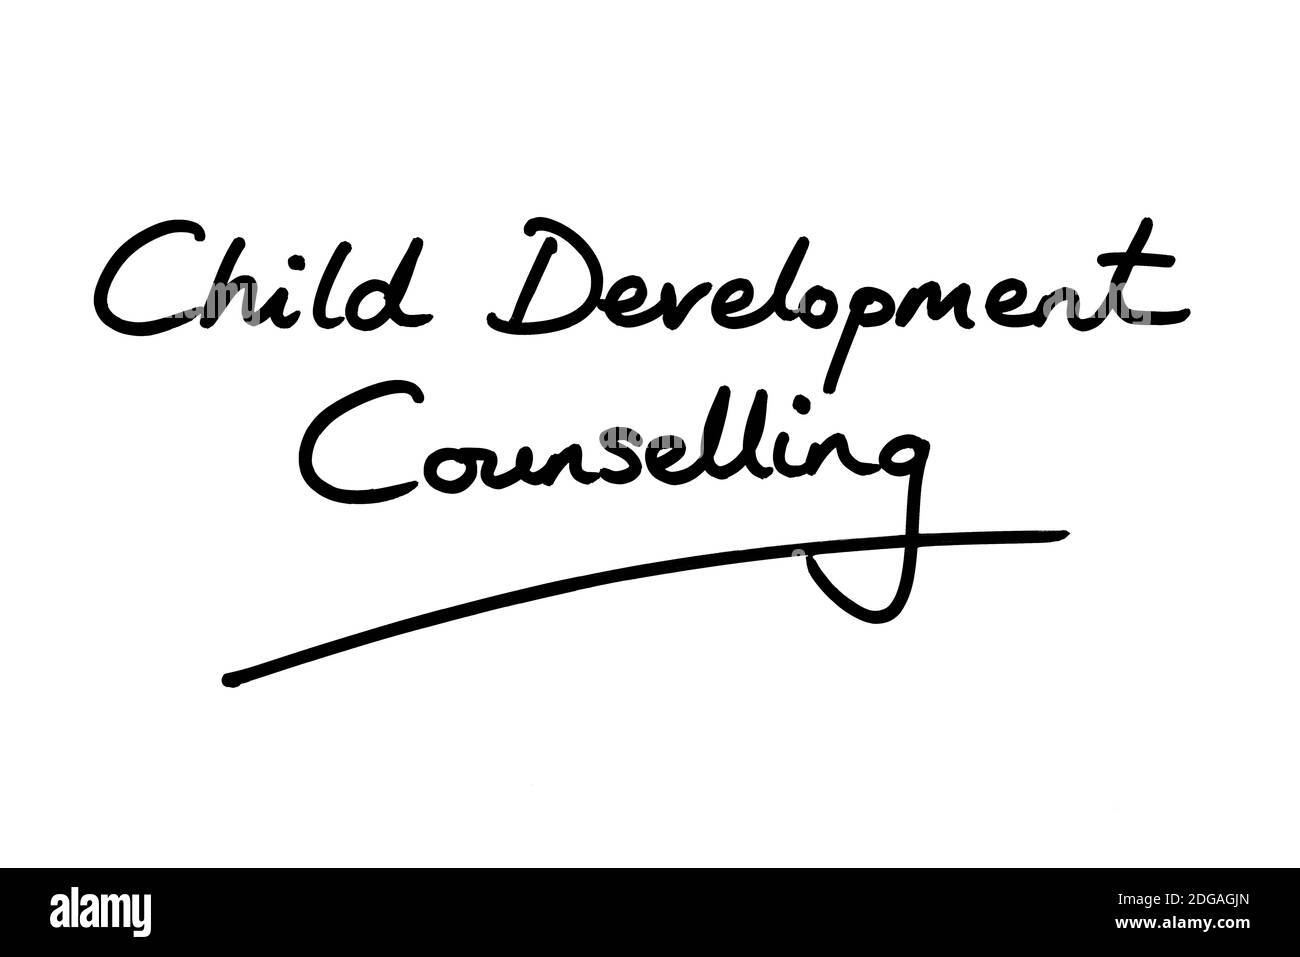 Child Development Counselling handwritten on a white background. Stock Photo